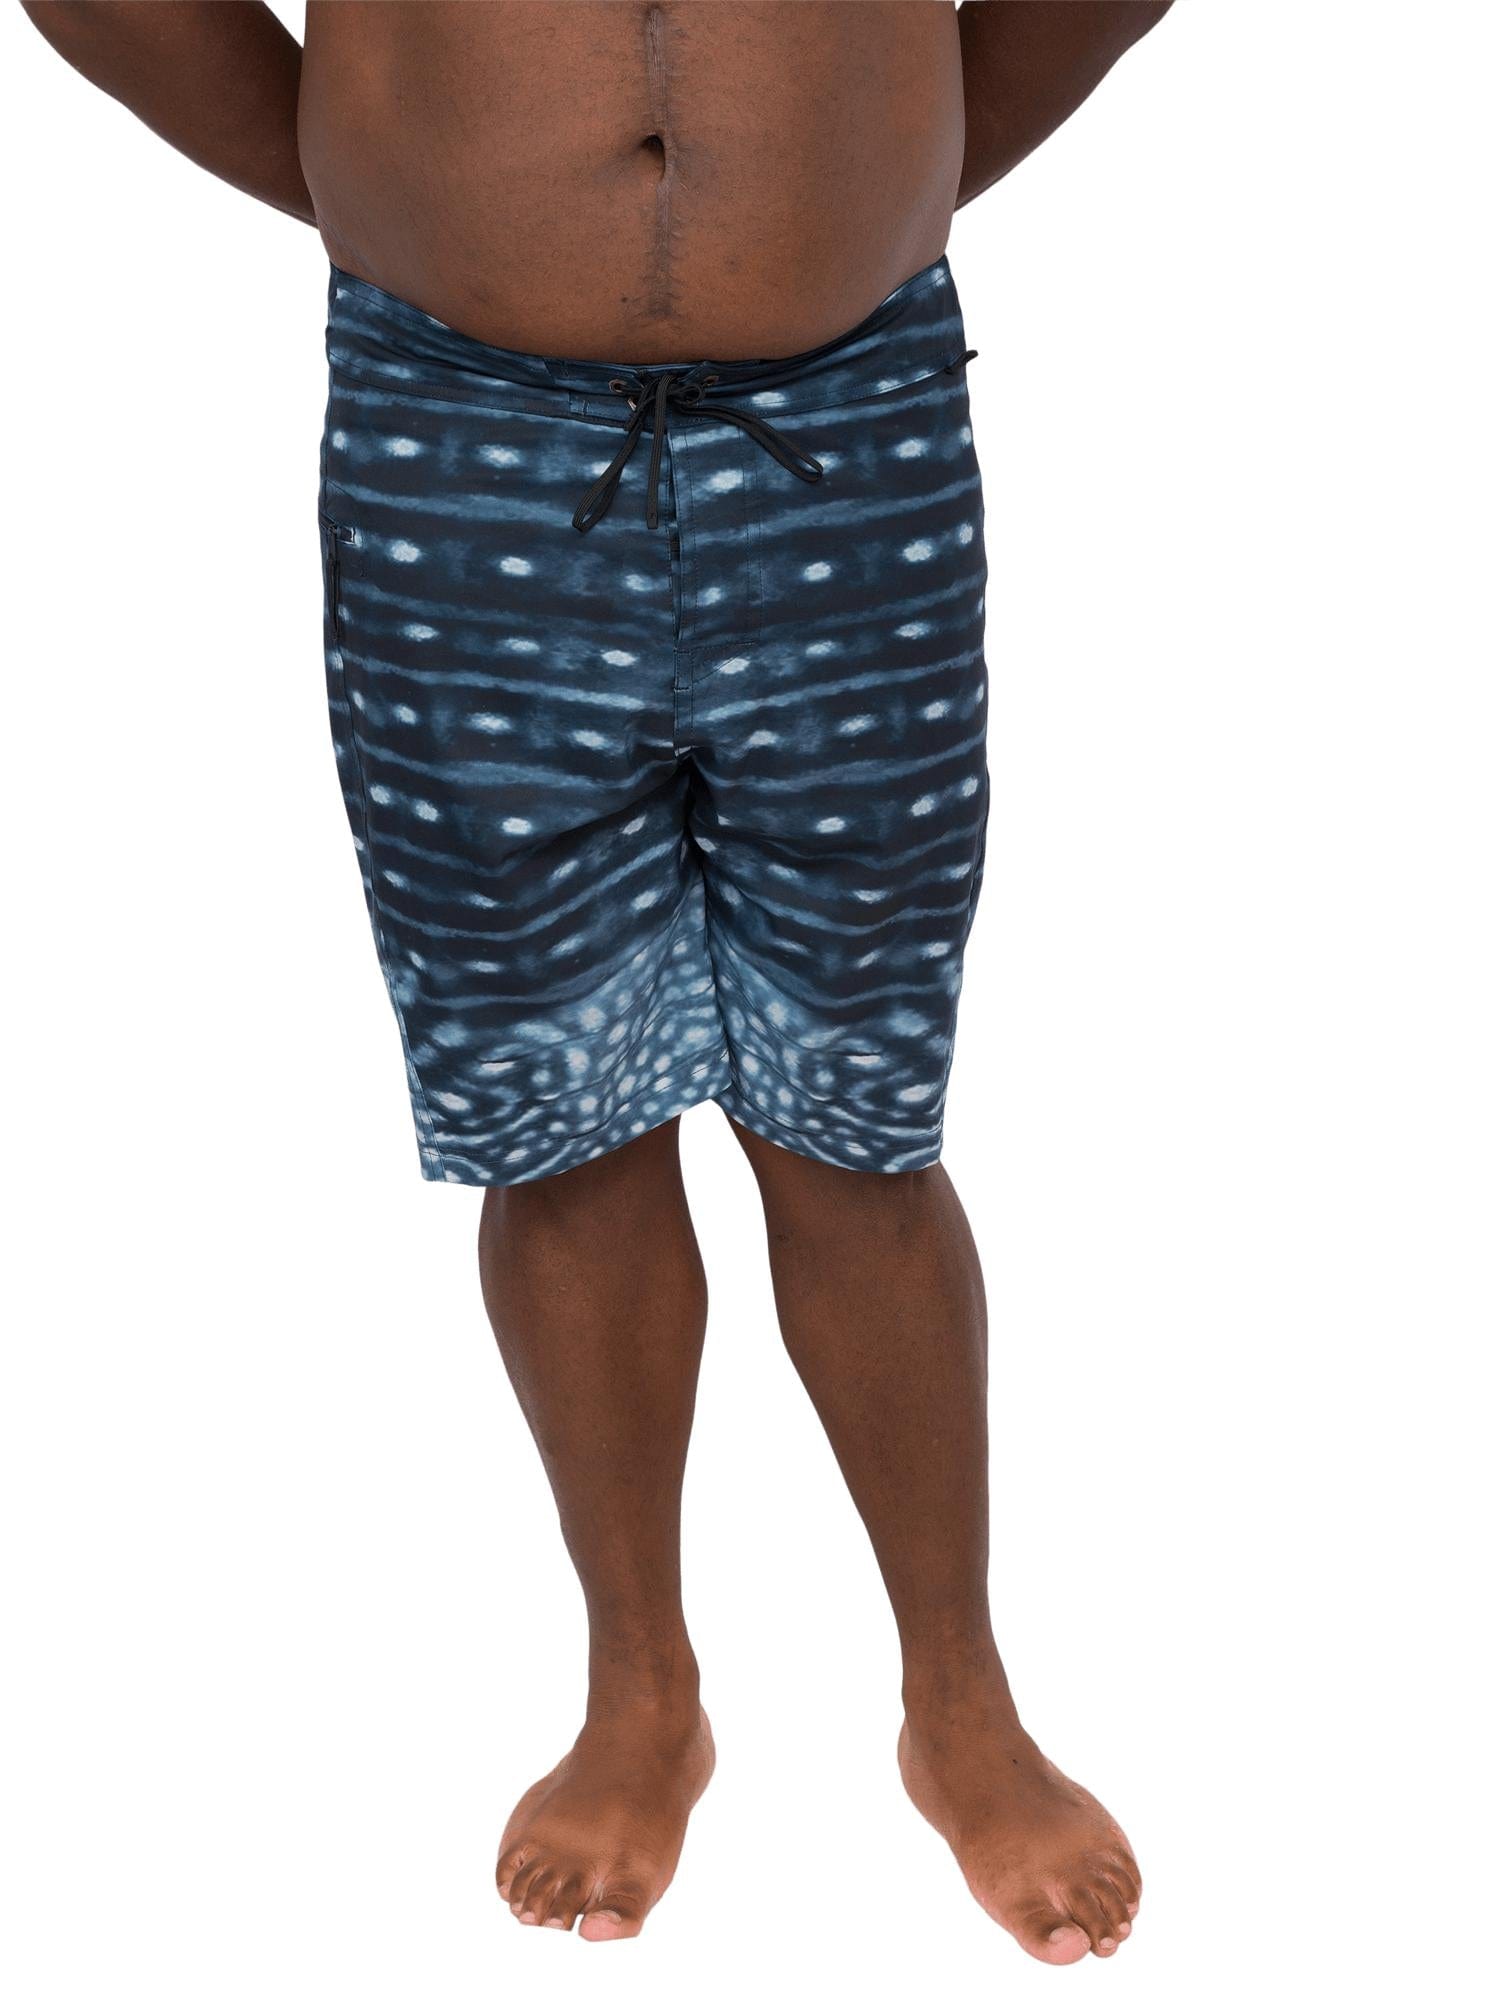 A Solid Color BEST SELLING Women's (Swim) Board Shorts - Regular Ris